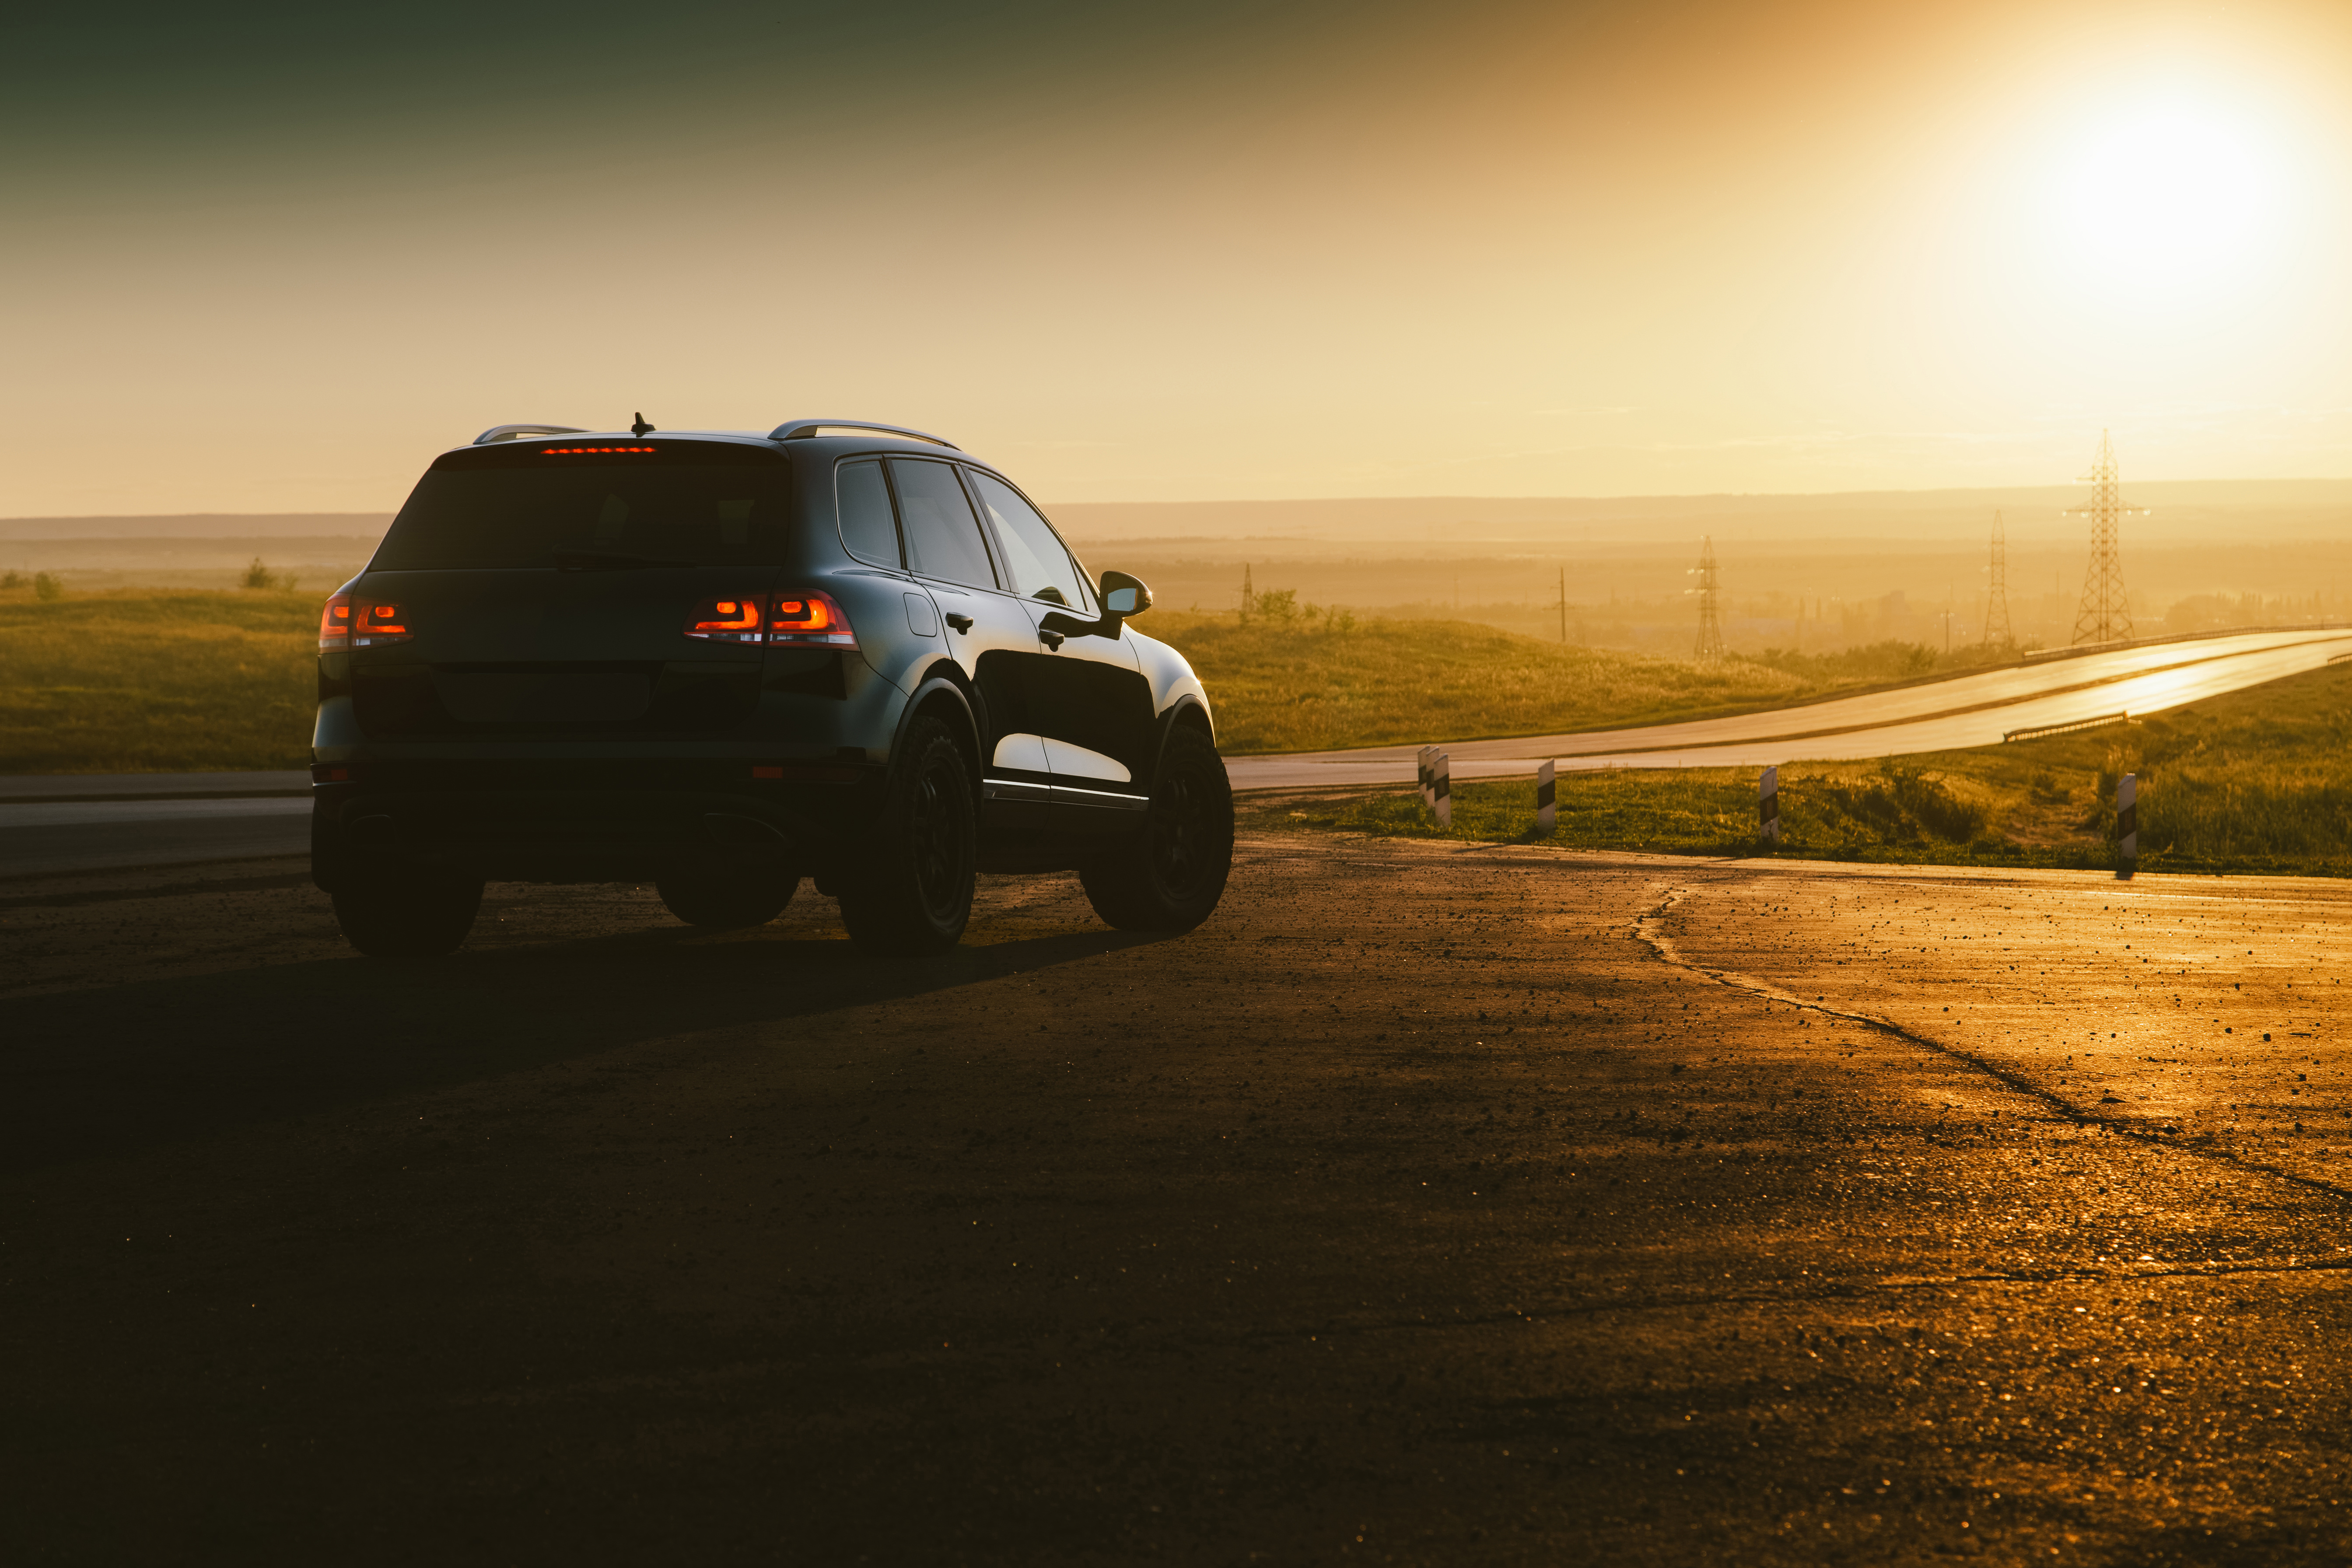 A sleek black SUV overlooks a motorway at sunset.